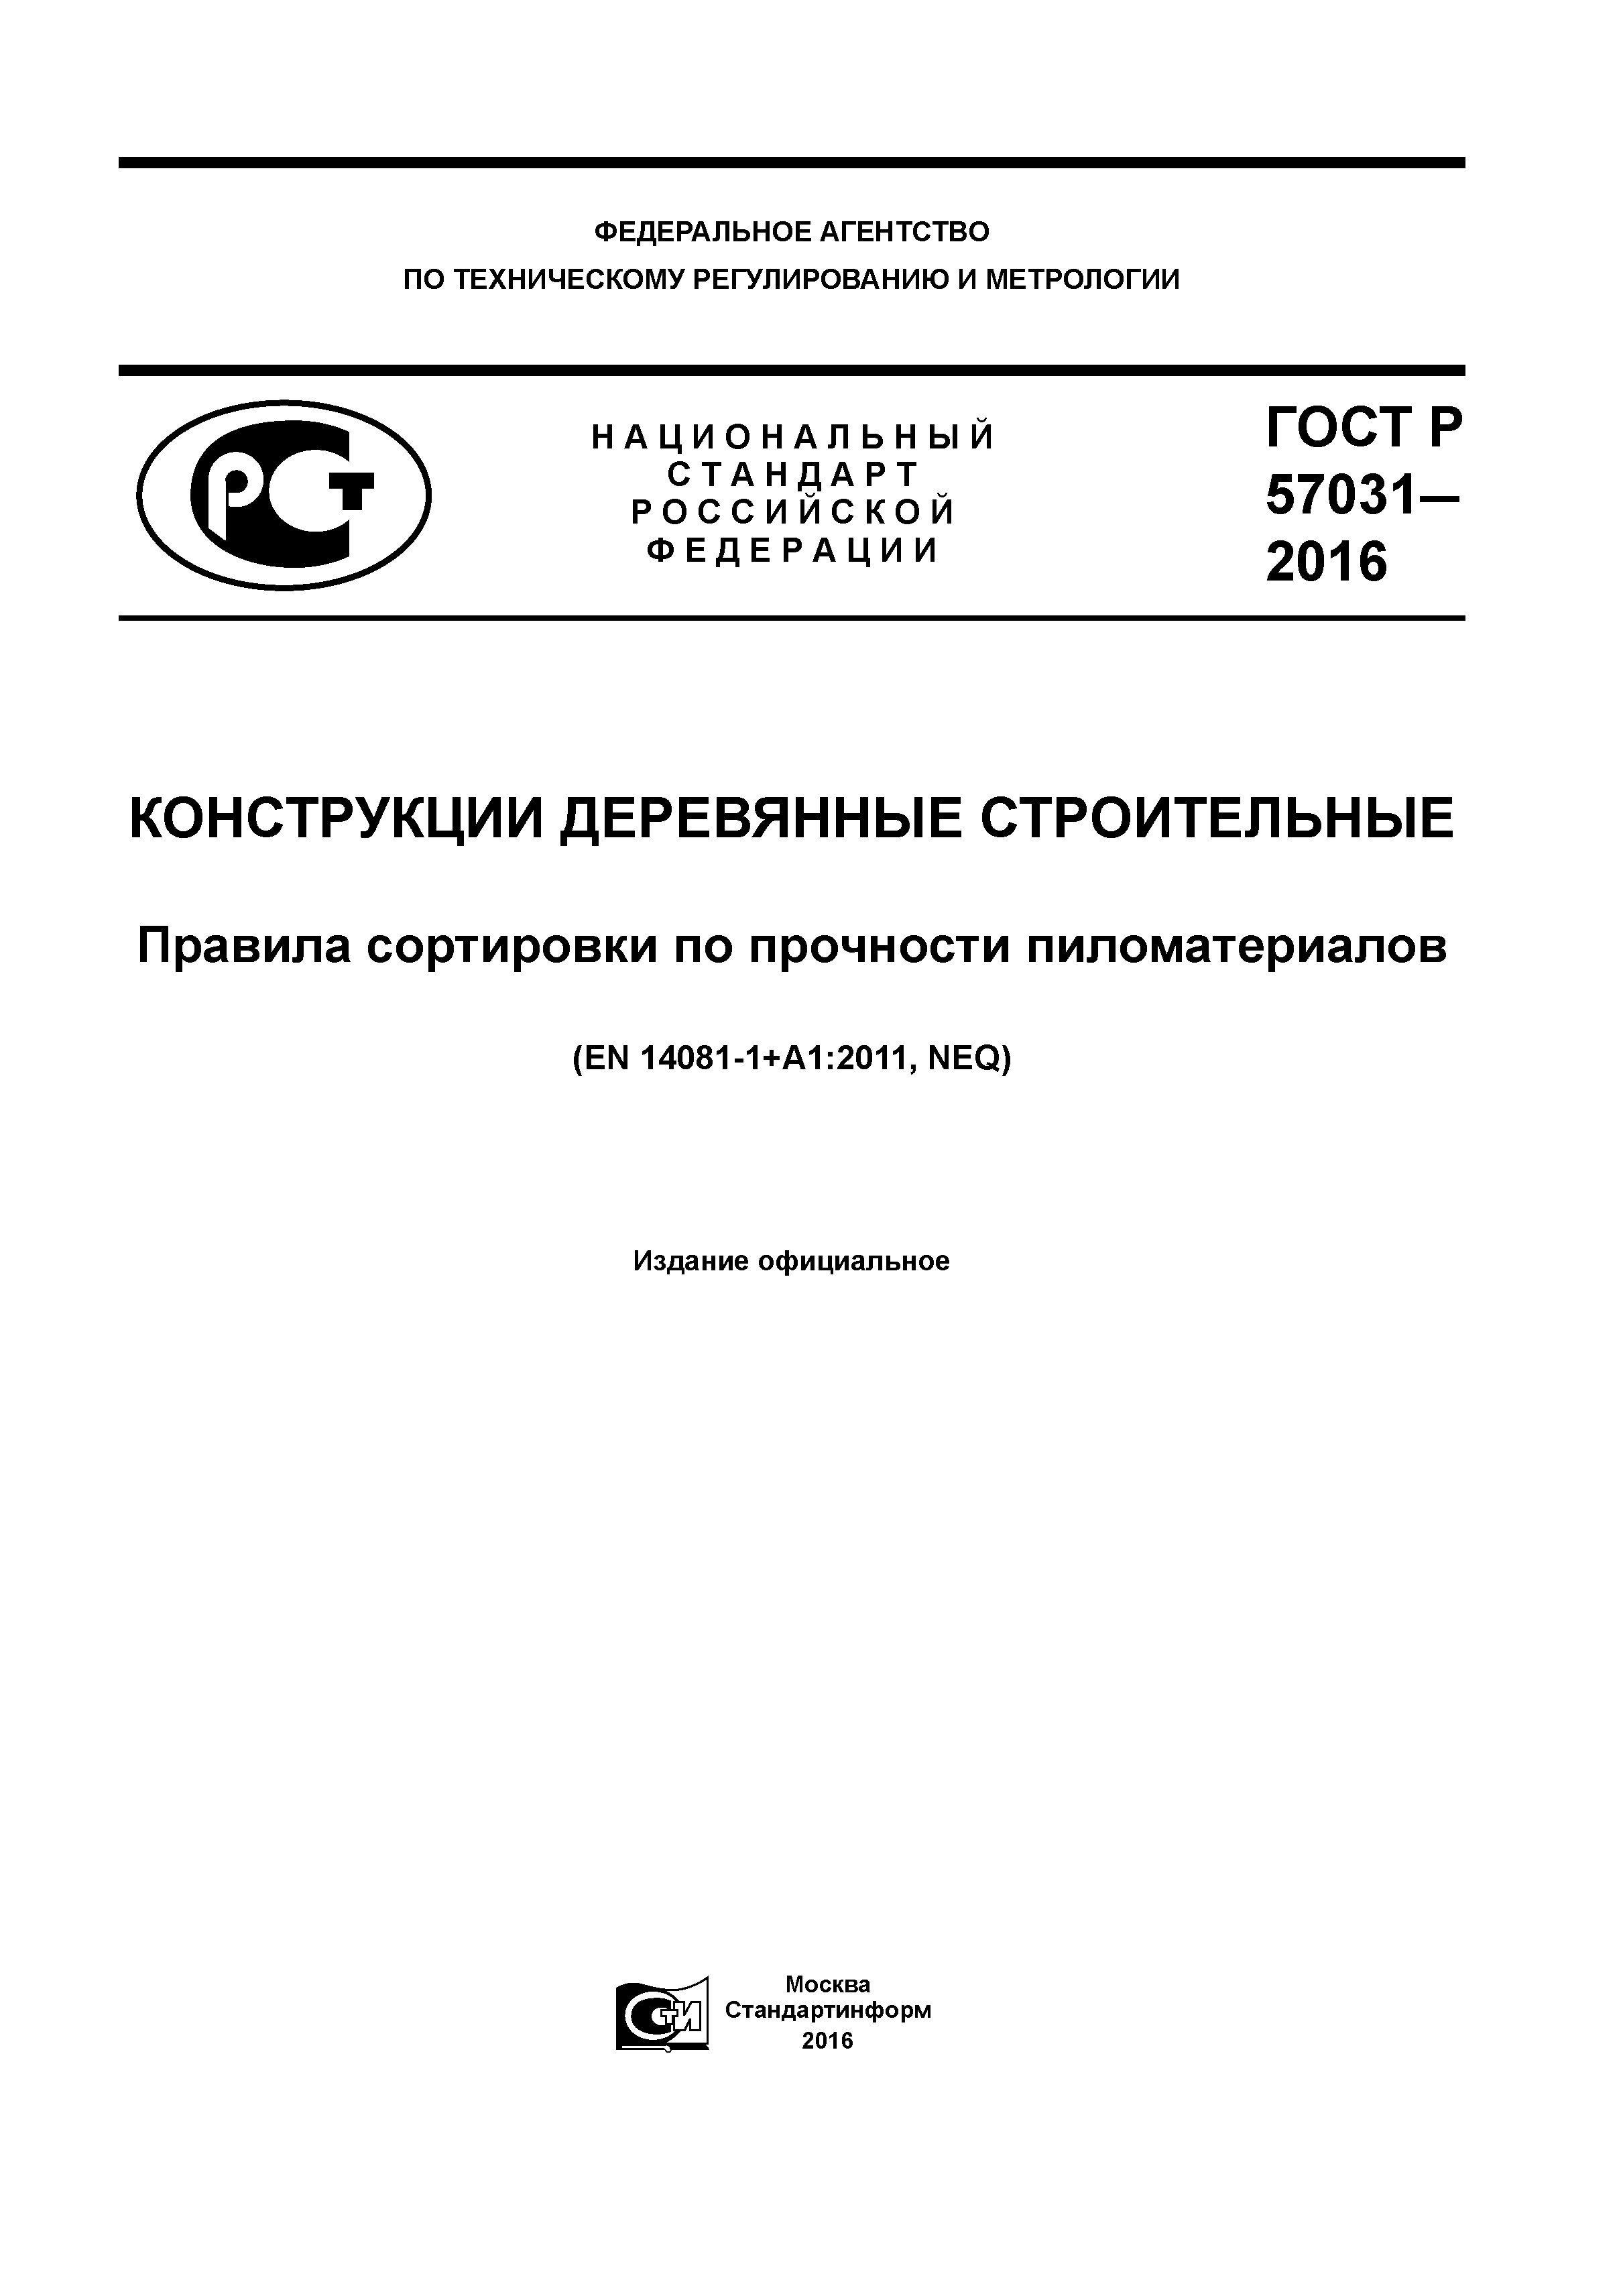 ГОСТ Р 57031-2016